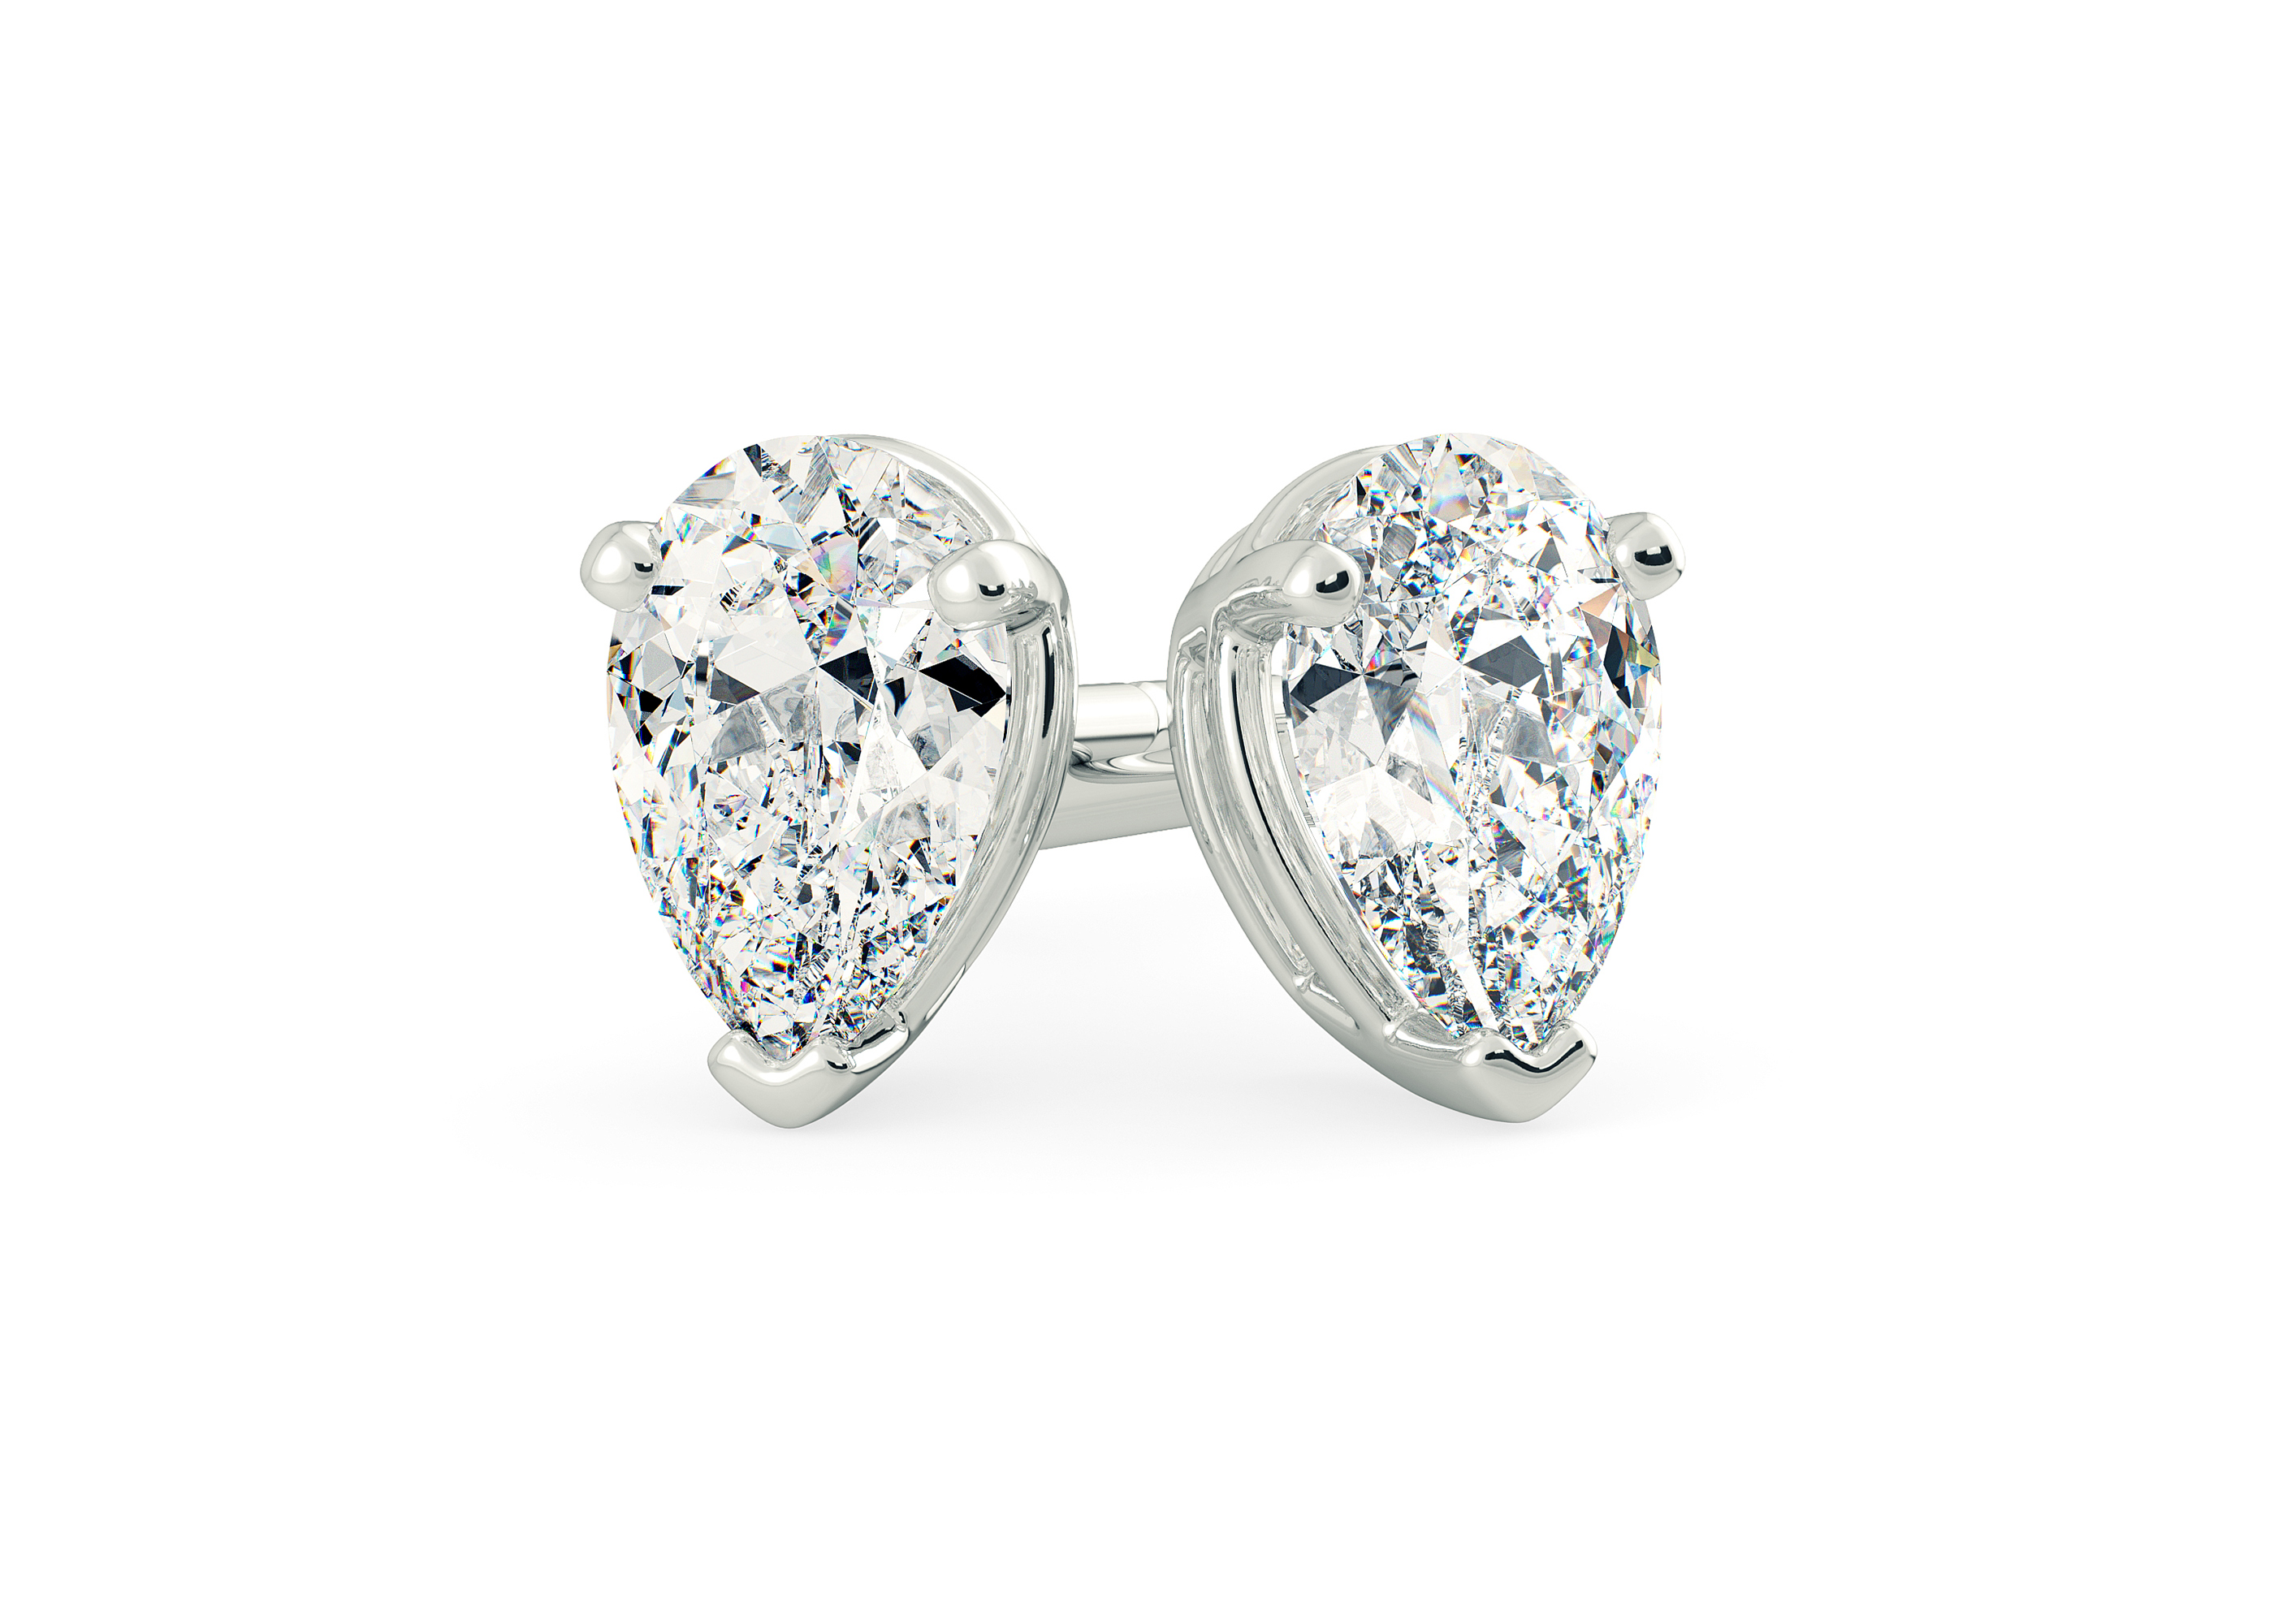 Half Carat Pear Diamond Stud Earrings in Platinum 950